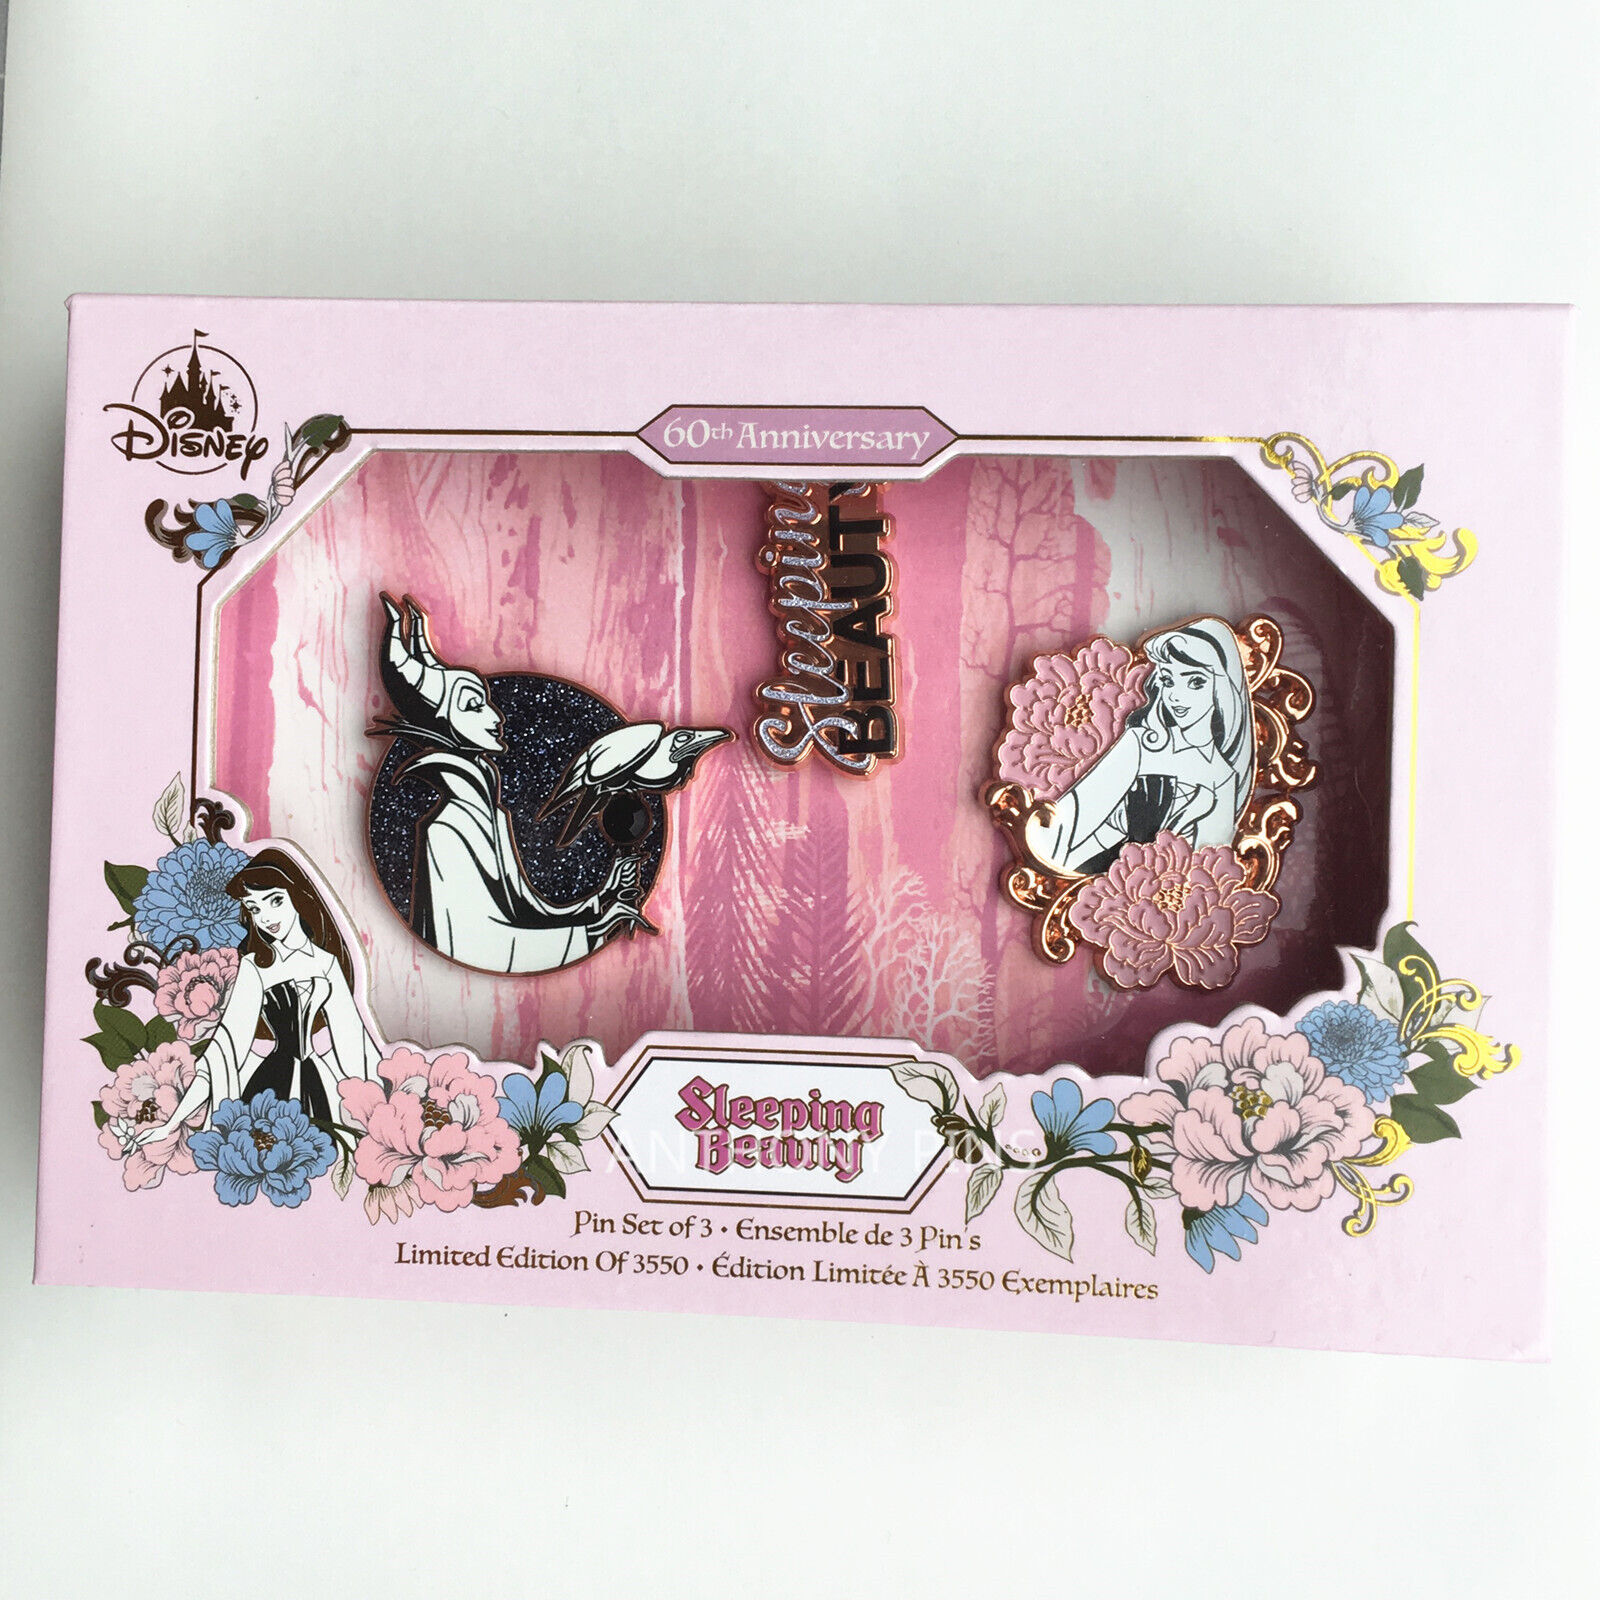 Disney Pin Sleeping Beauty 60th Anniversary Box Pins Set of 3 Limited LE 3550